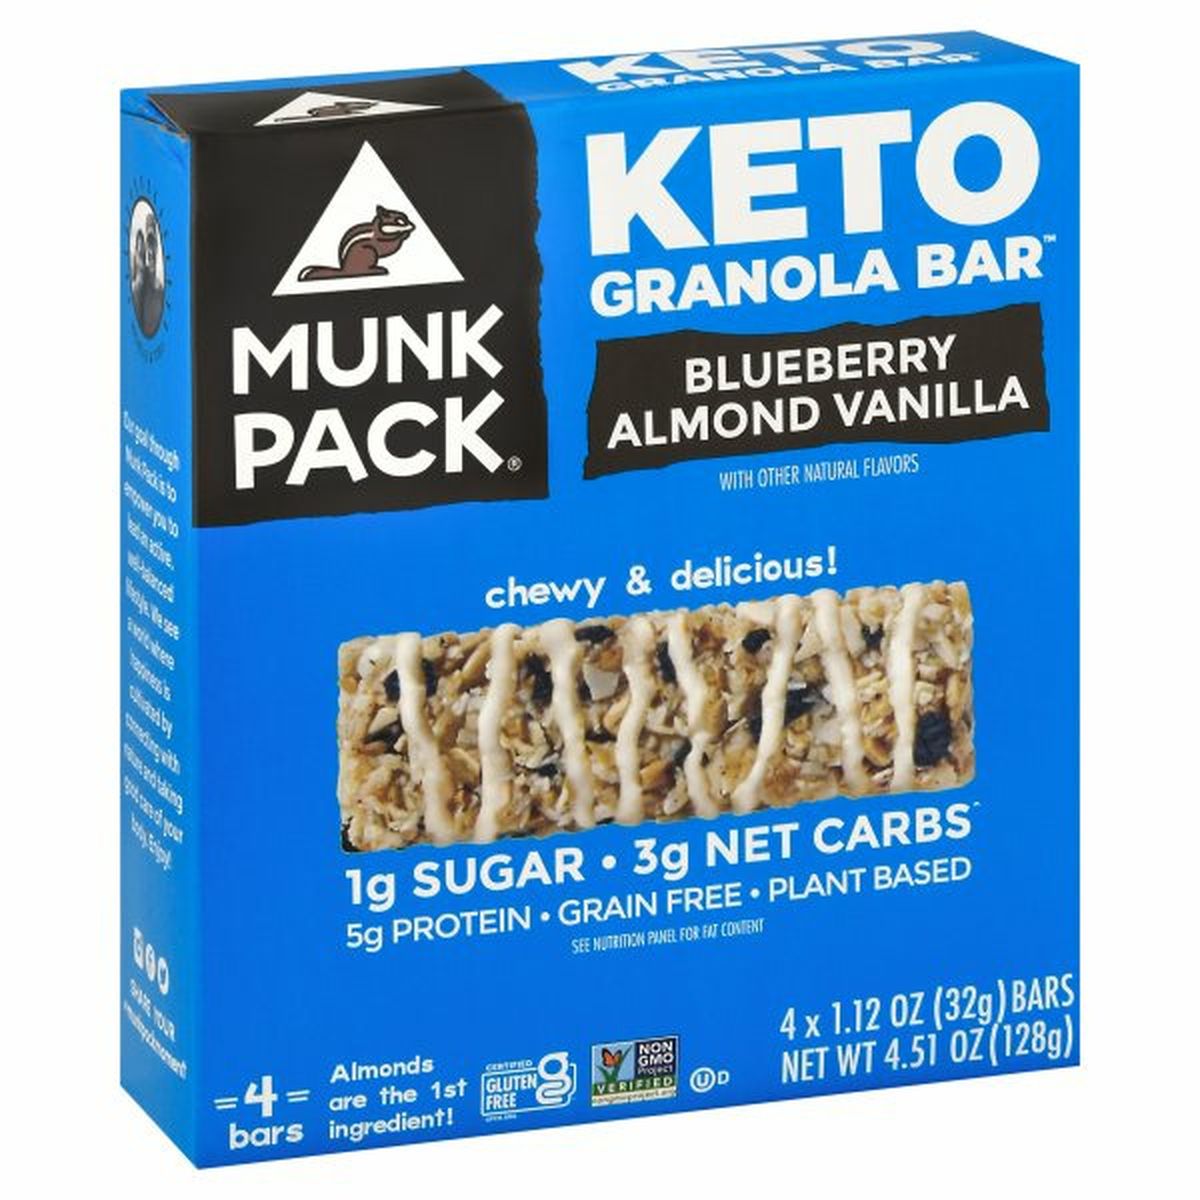 Calories in Munk Pack Granola Bar, Keto, Blueberry Almond Vanilla